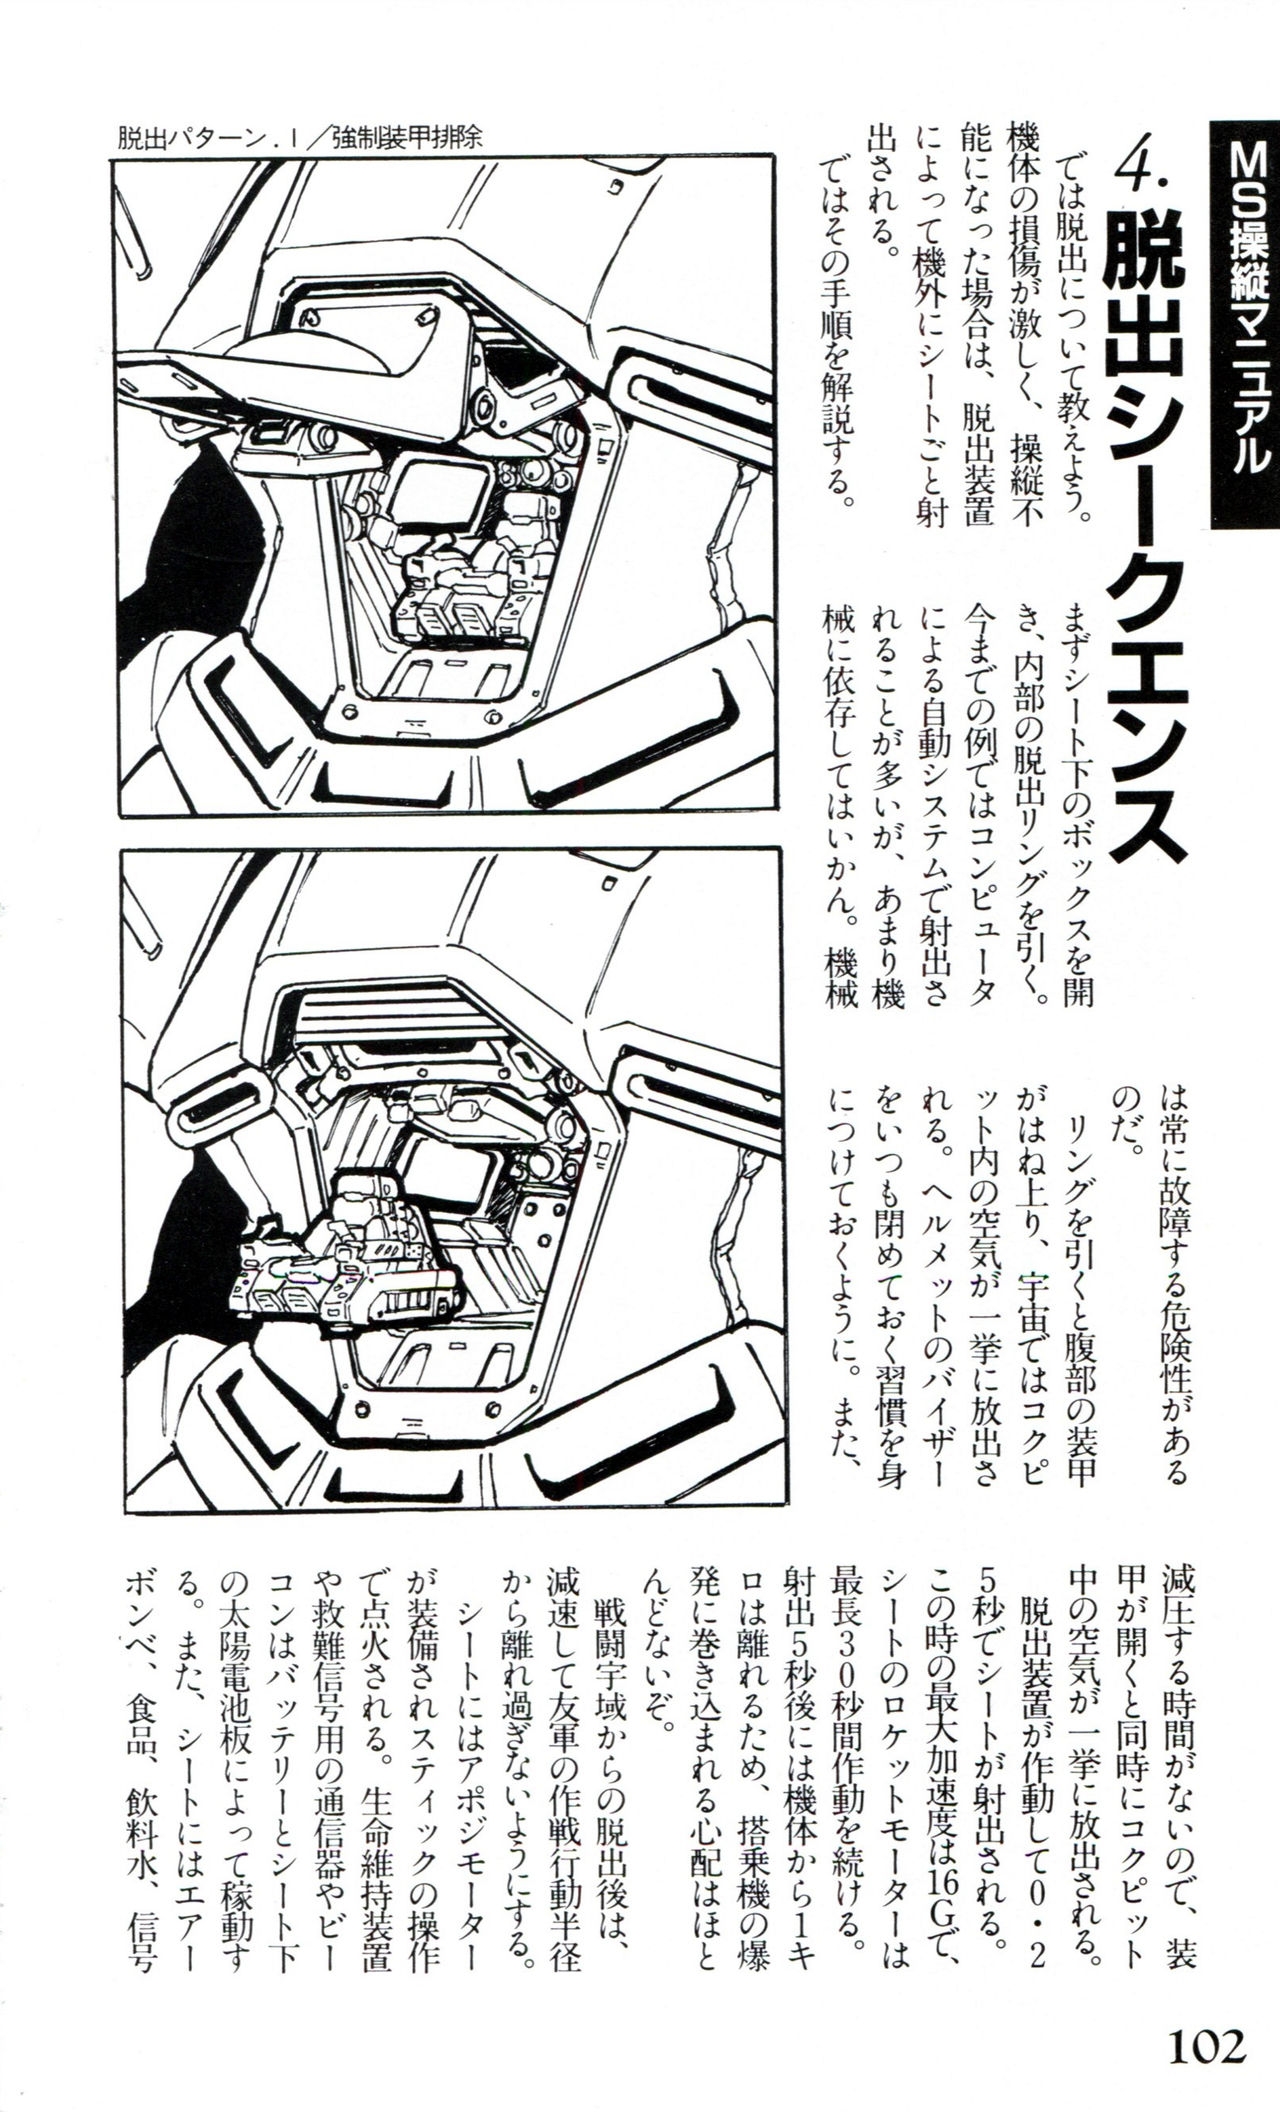 Mobile Suit Gundam U.C. Box MS Gundam Encyclopedia NO.01 - Mobile Suit Gundam 101